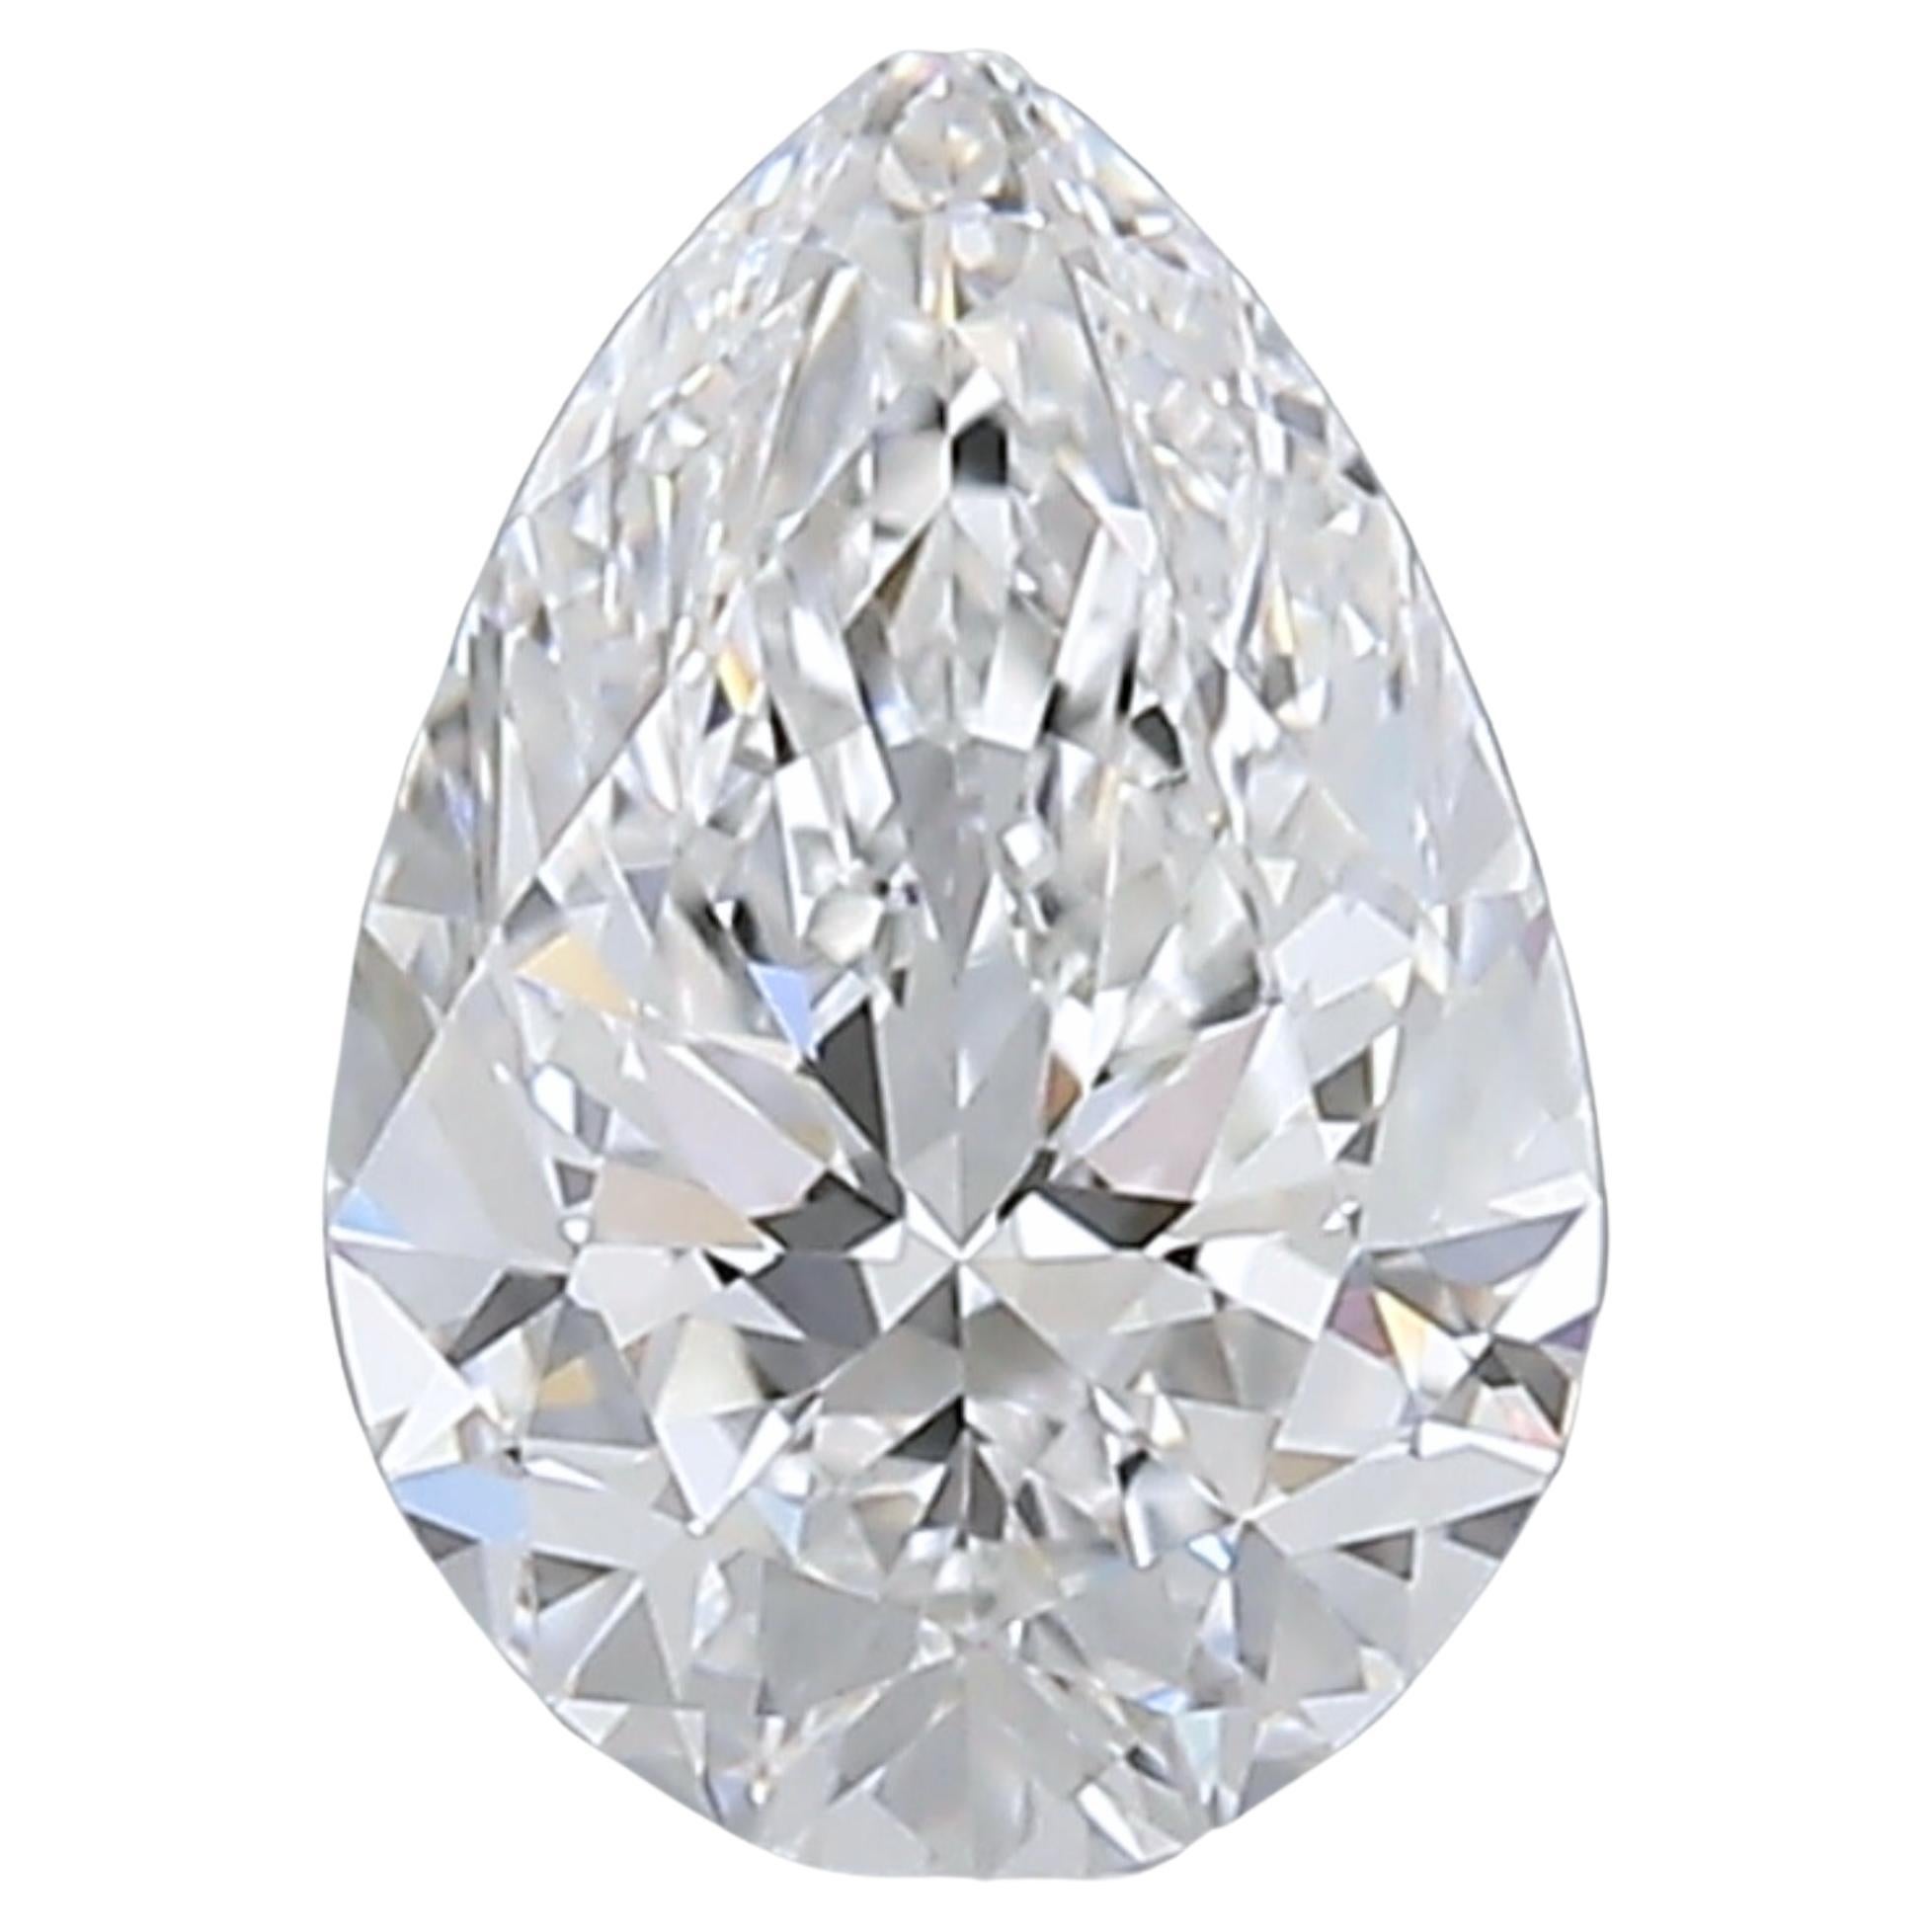 Sparkling 0.70 carat Pear Cut Brilliant Diamond For Sale